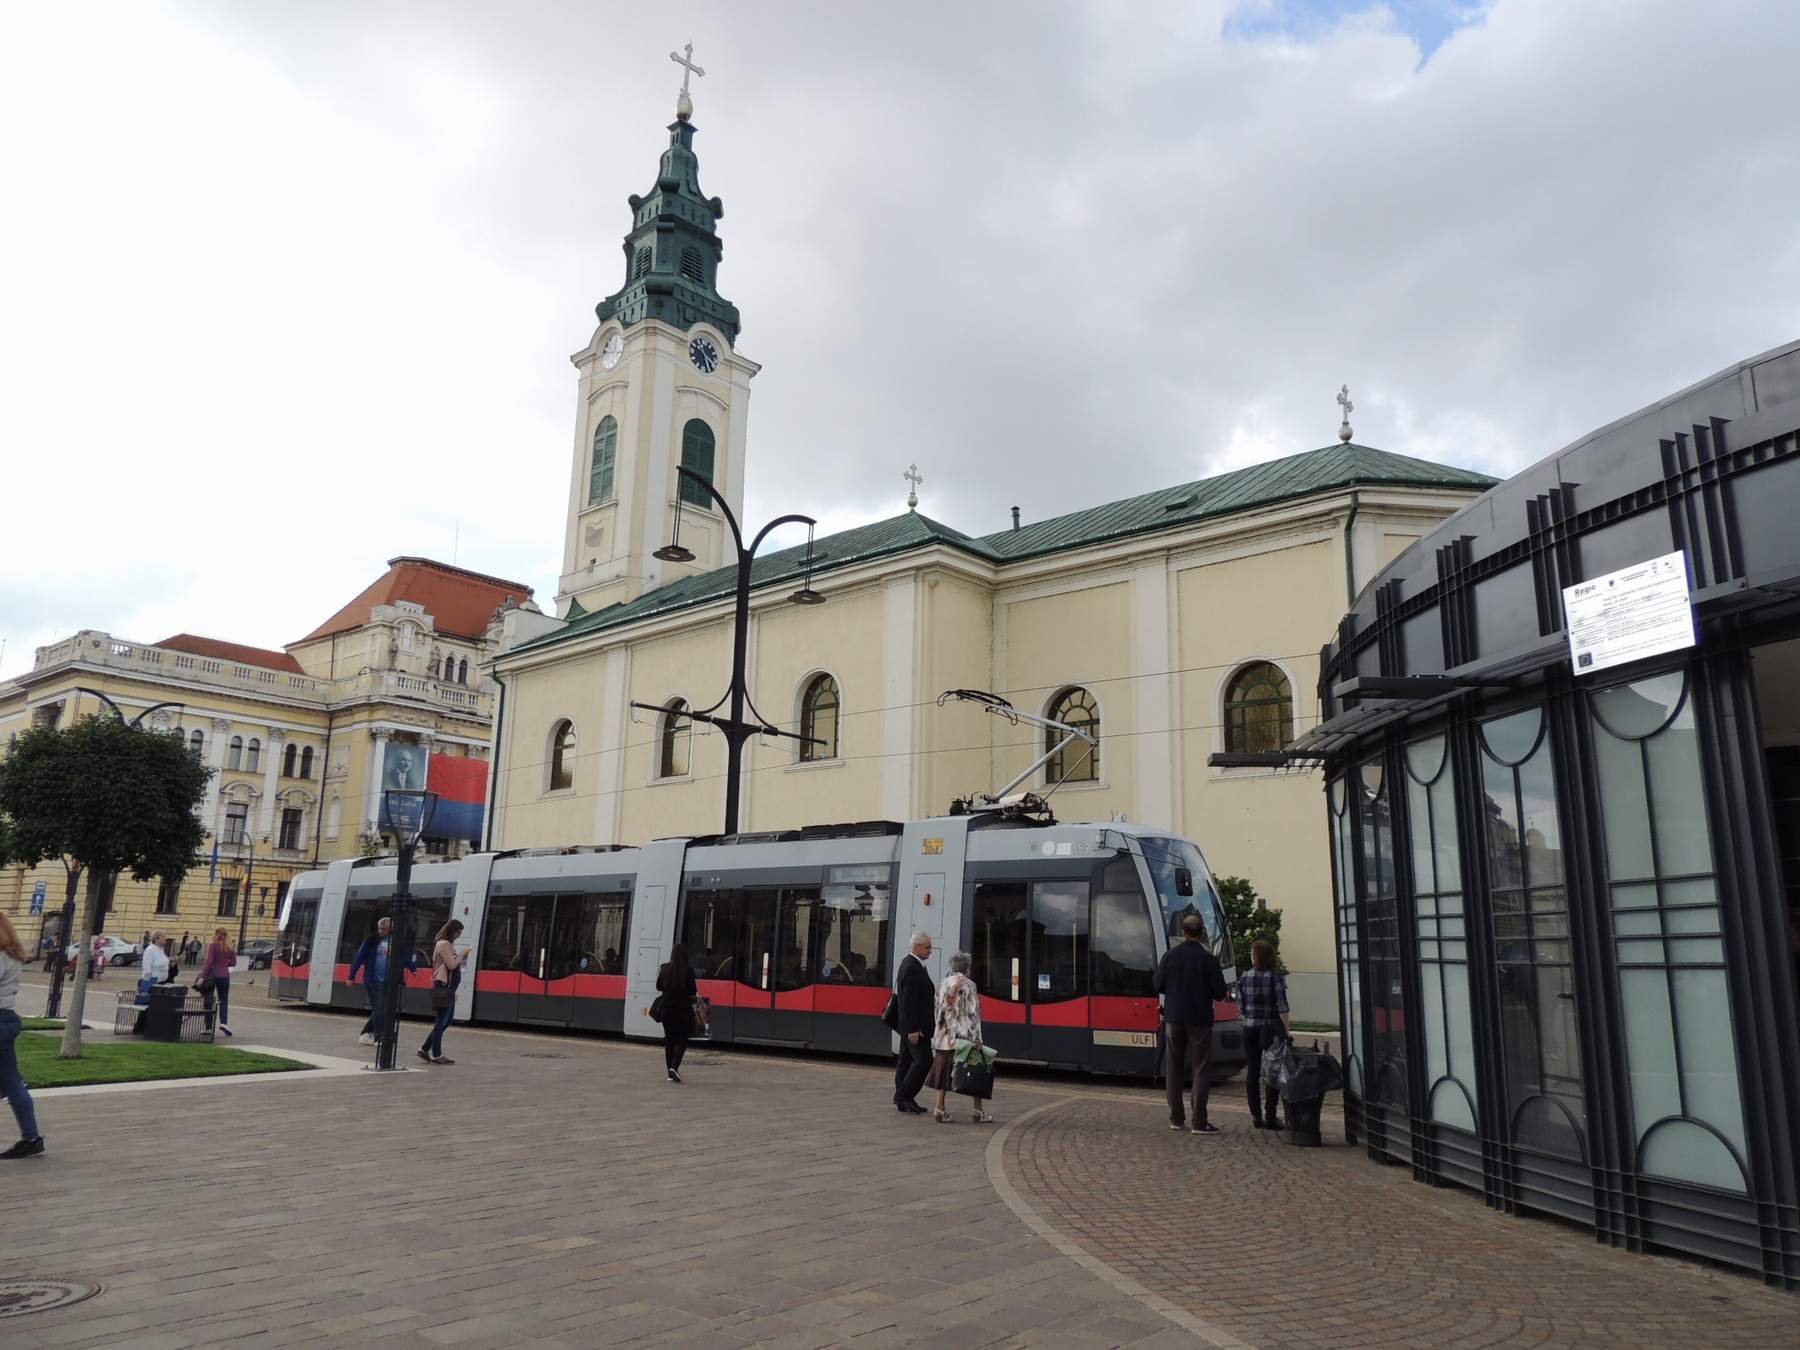  332238_221548_stiri_Oradea-statie-tramvai-Piata-Unirii-centrul-vechi